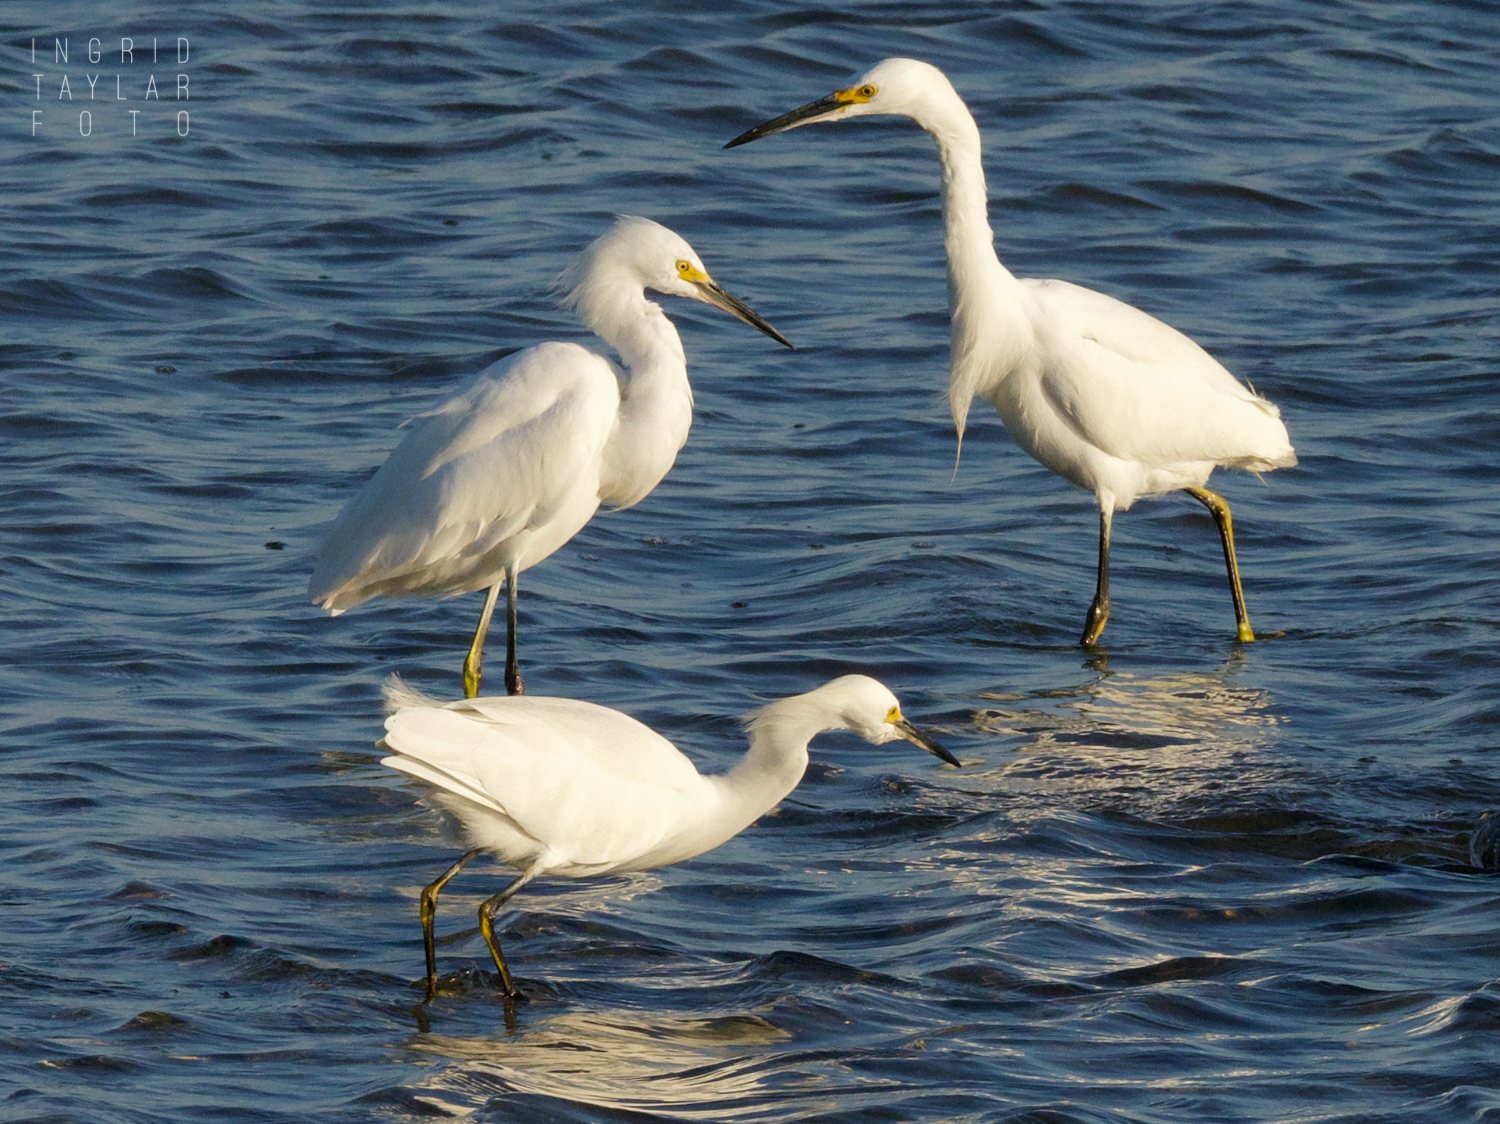 Snowy Egret Trio at Bolsa Chica Ecological Reserve